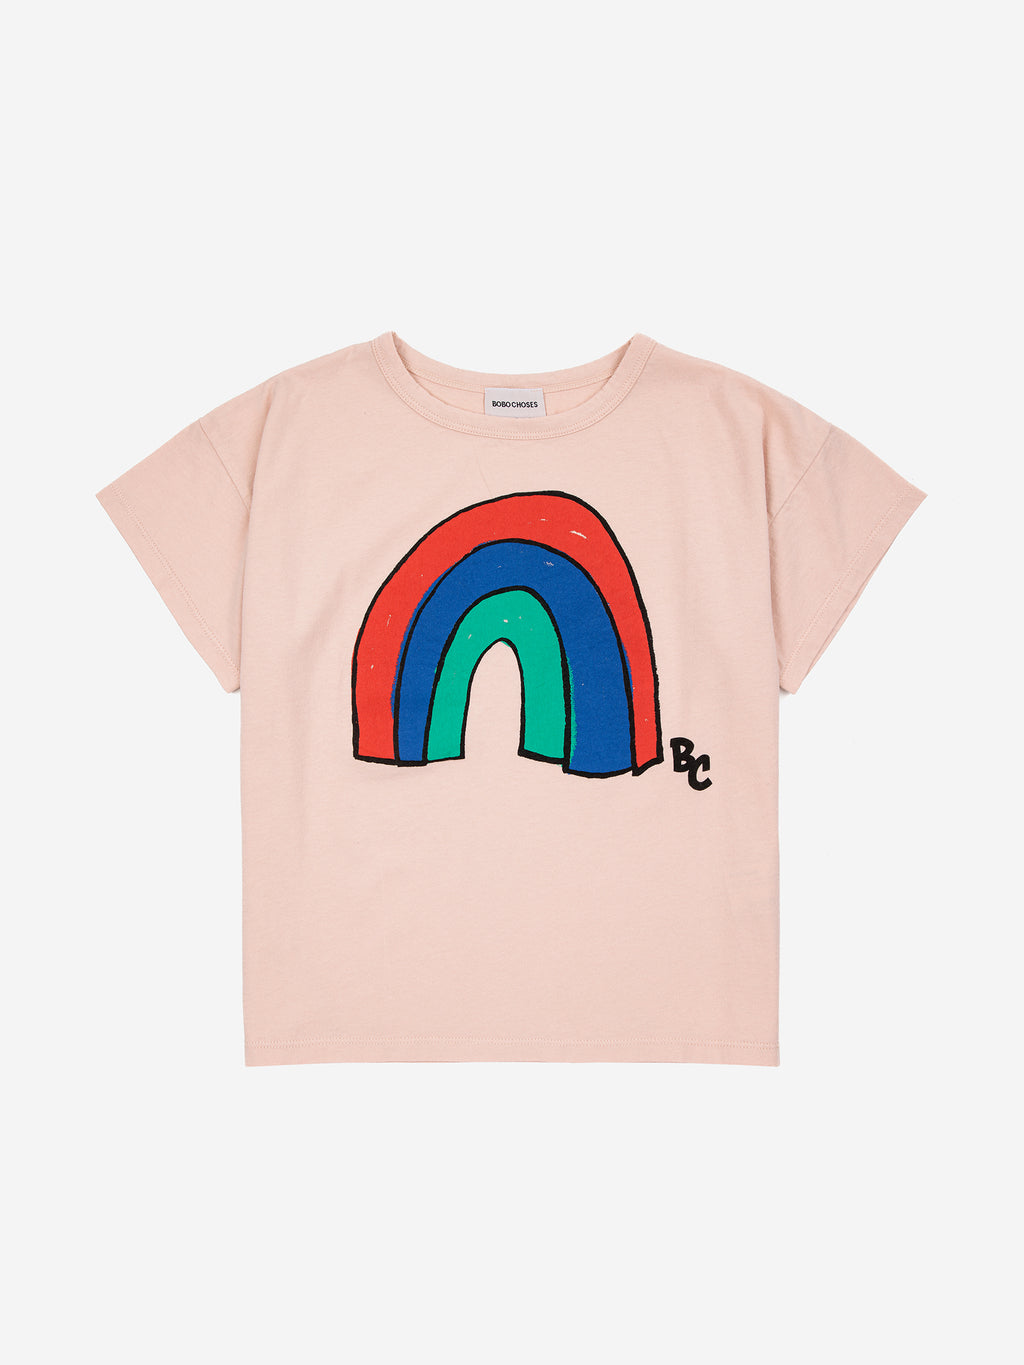 Bobo Choses Rainbow T-shirt - Light Pink